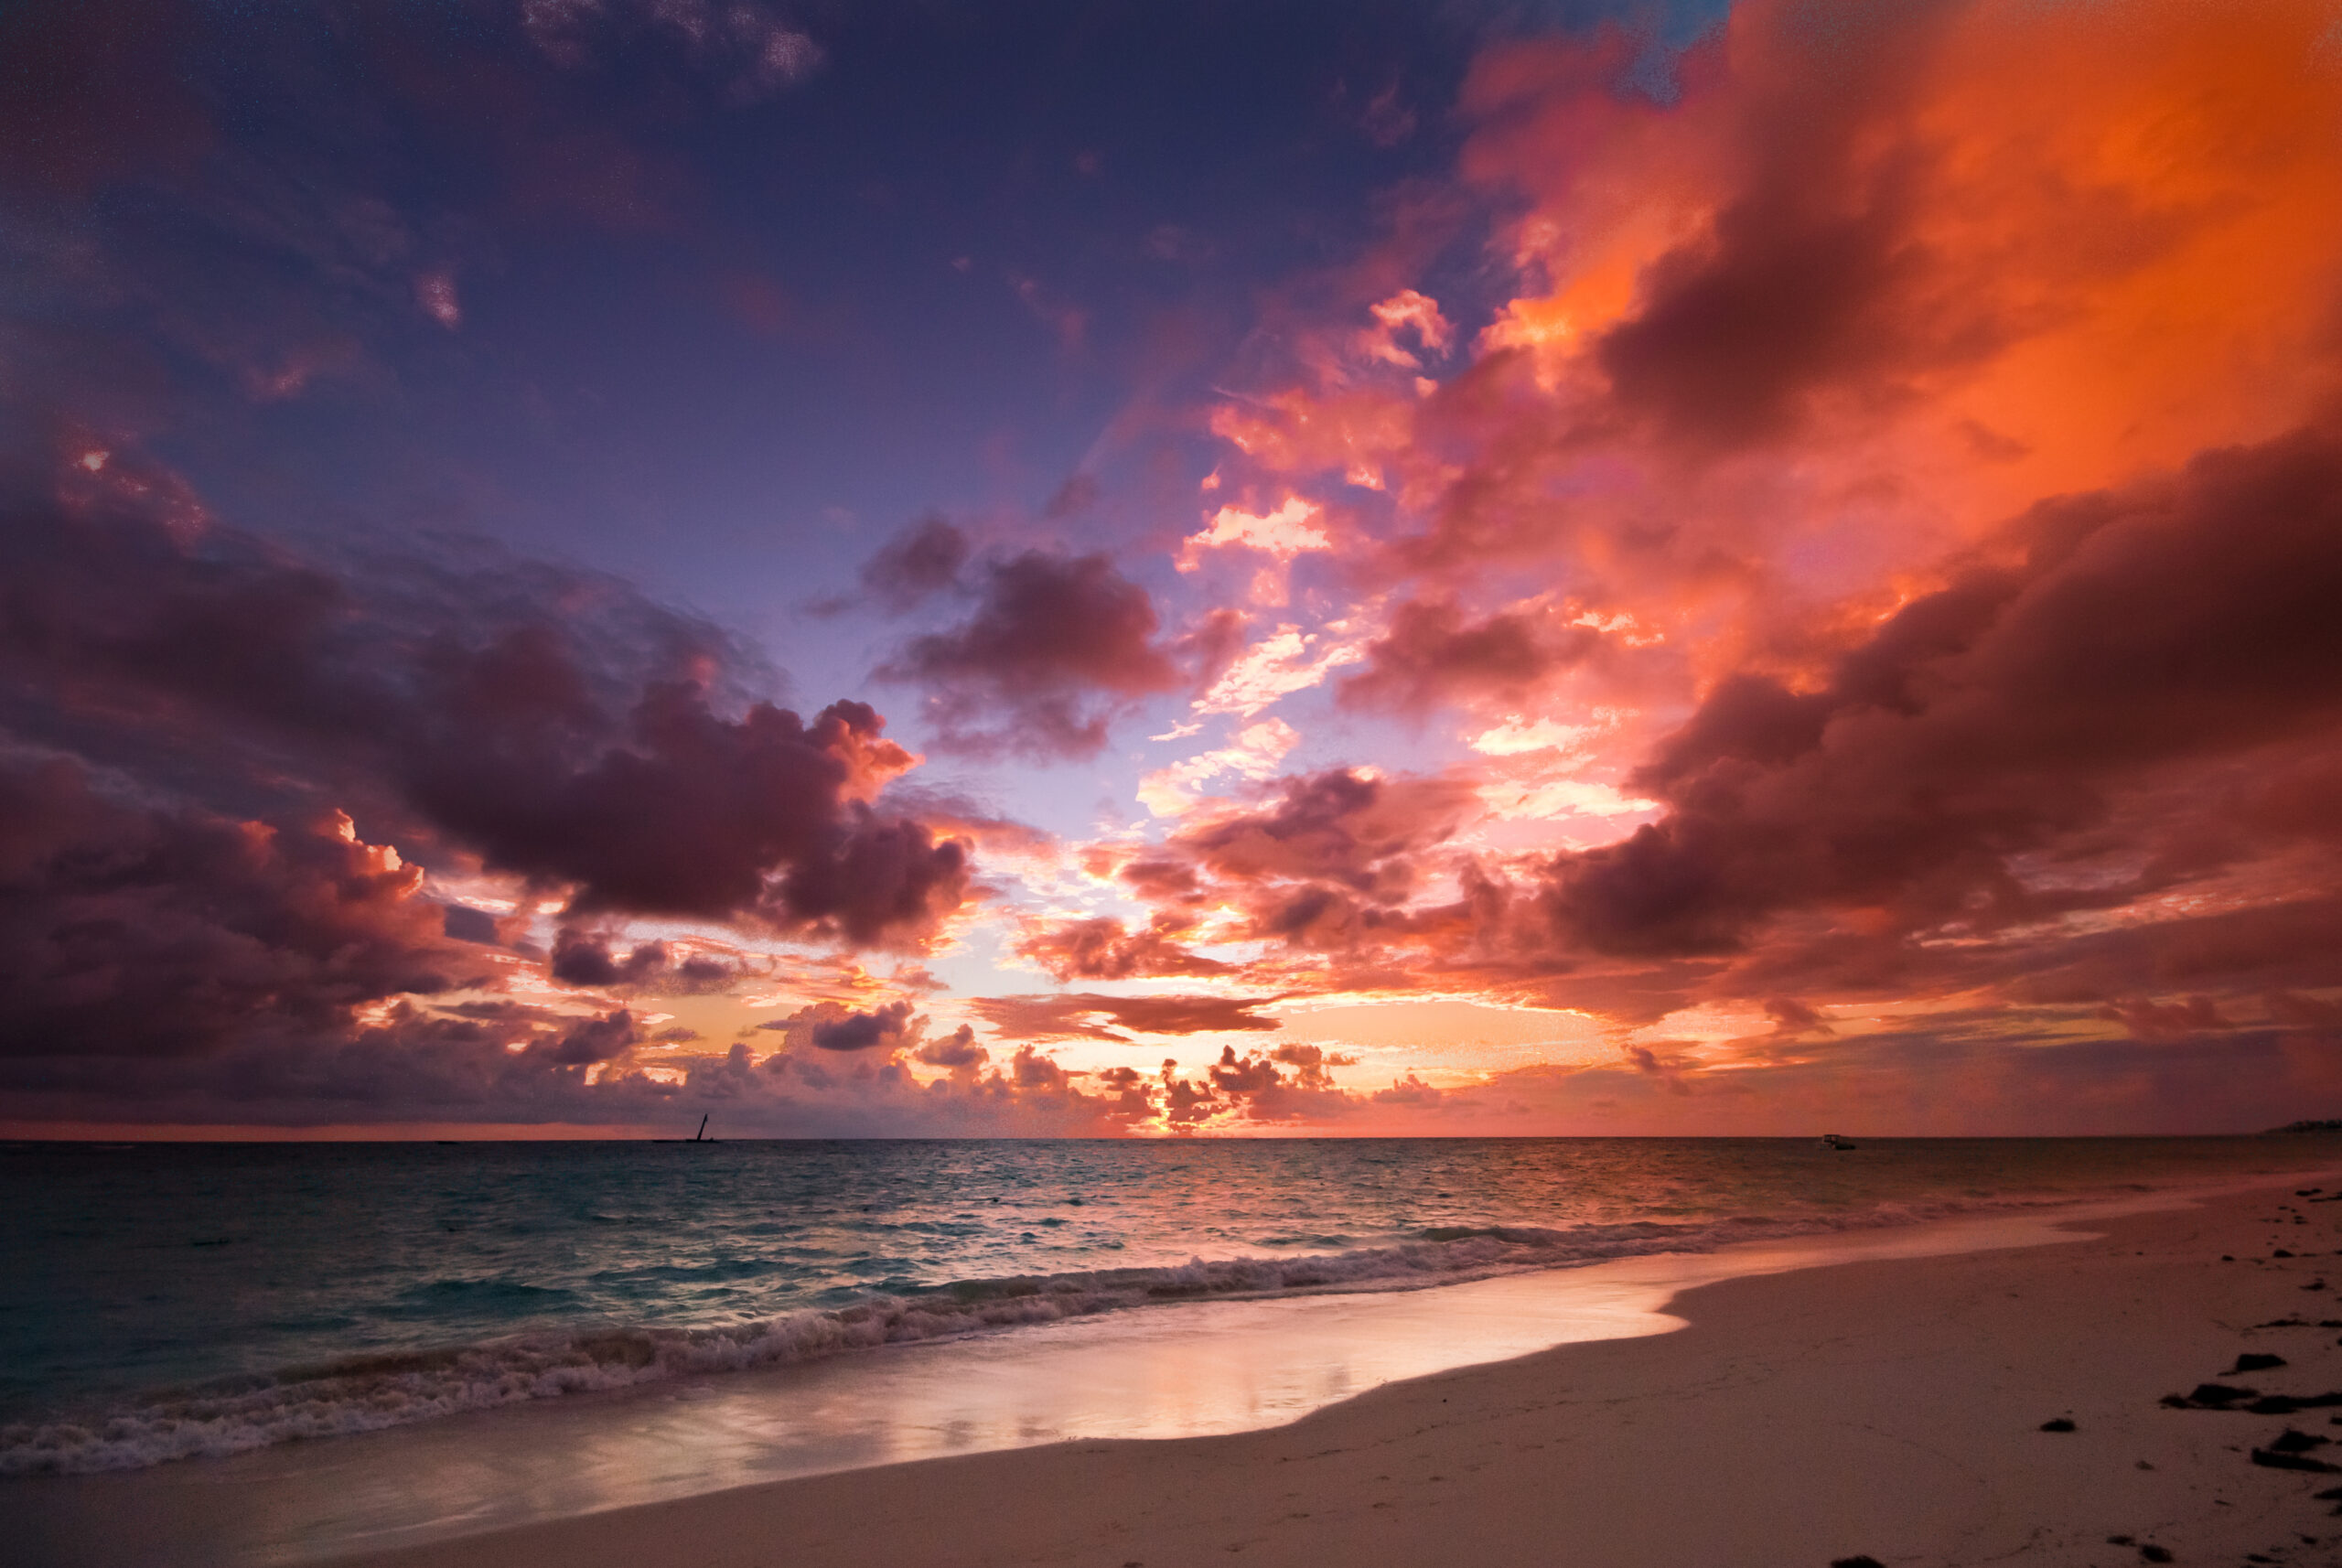 A beautiful sunrise at the beach